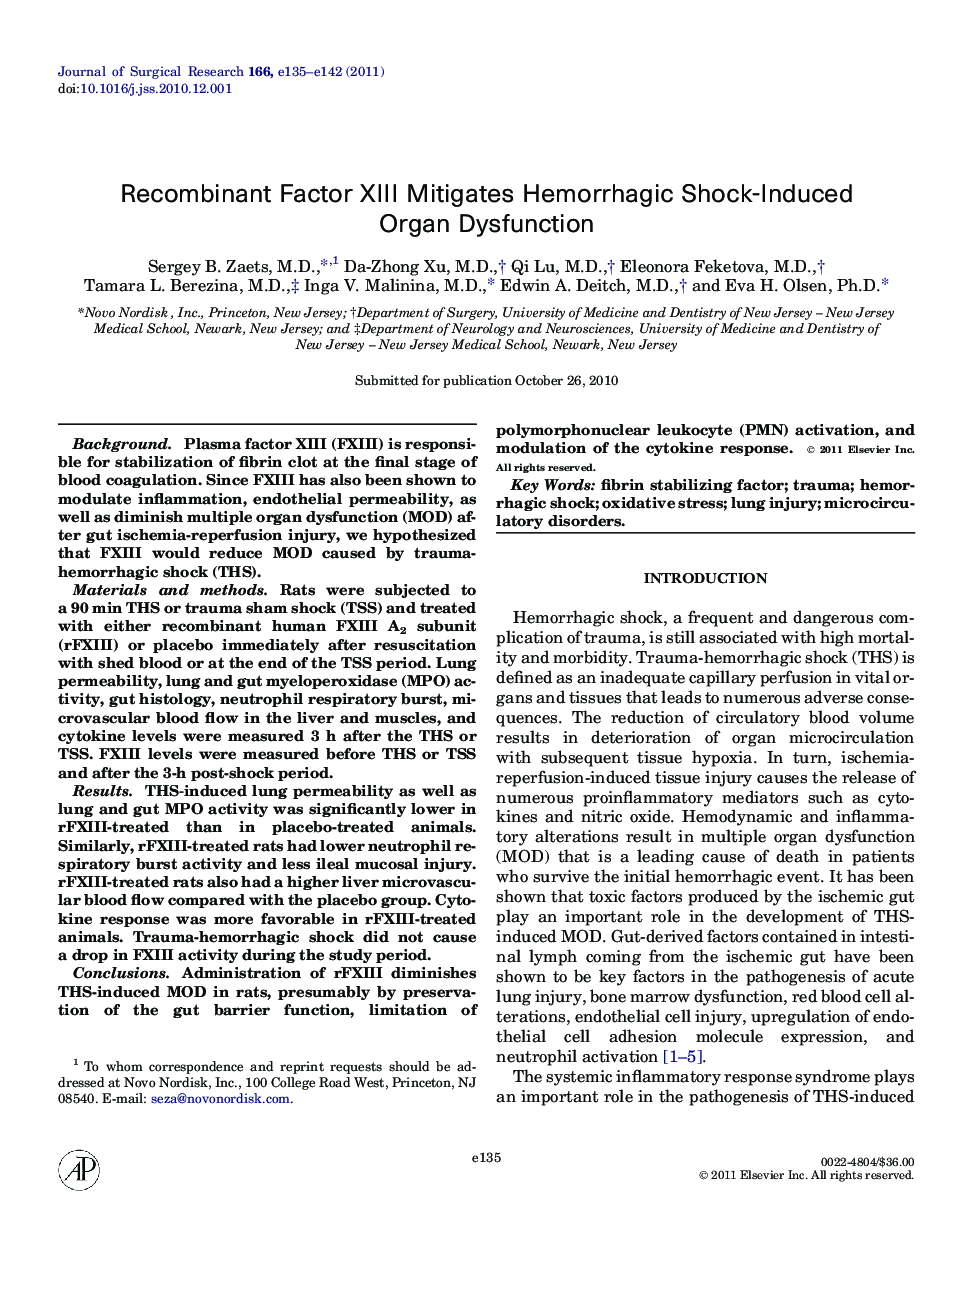 Recombinant Factor XIII Mitigates Hemorrhagic Shock-Induced Organ Dysfunction